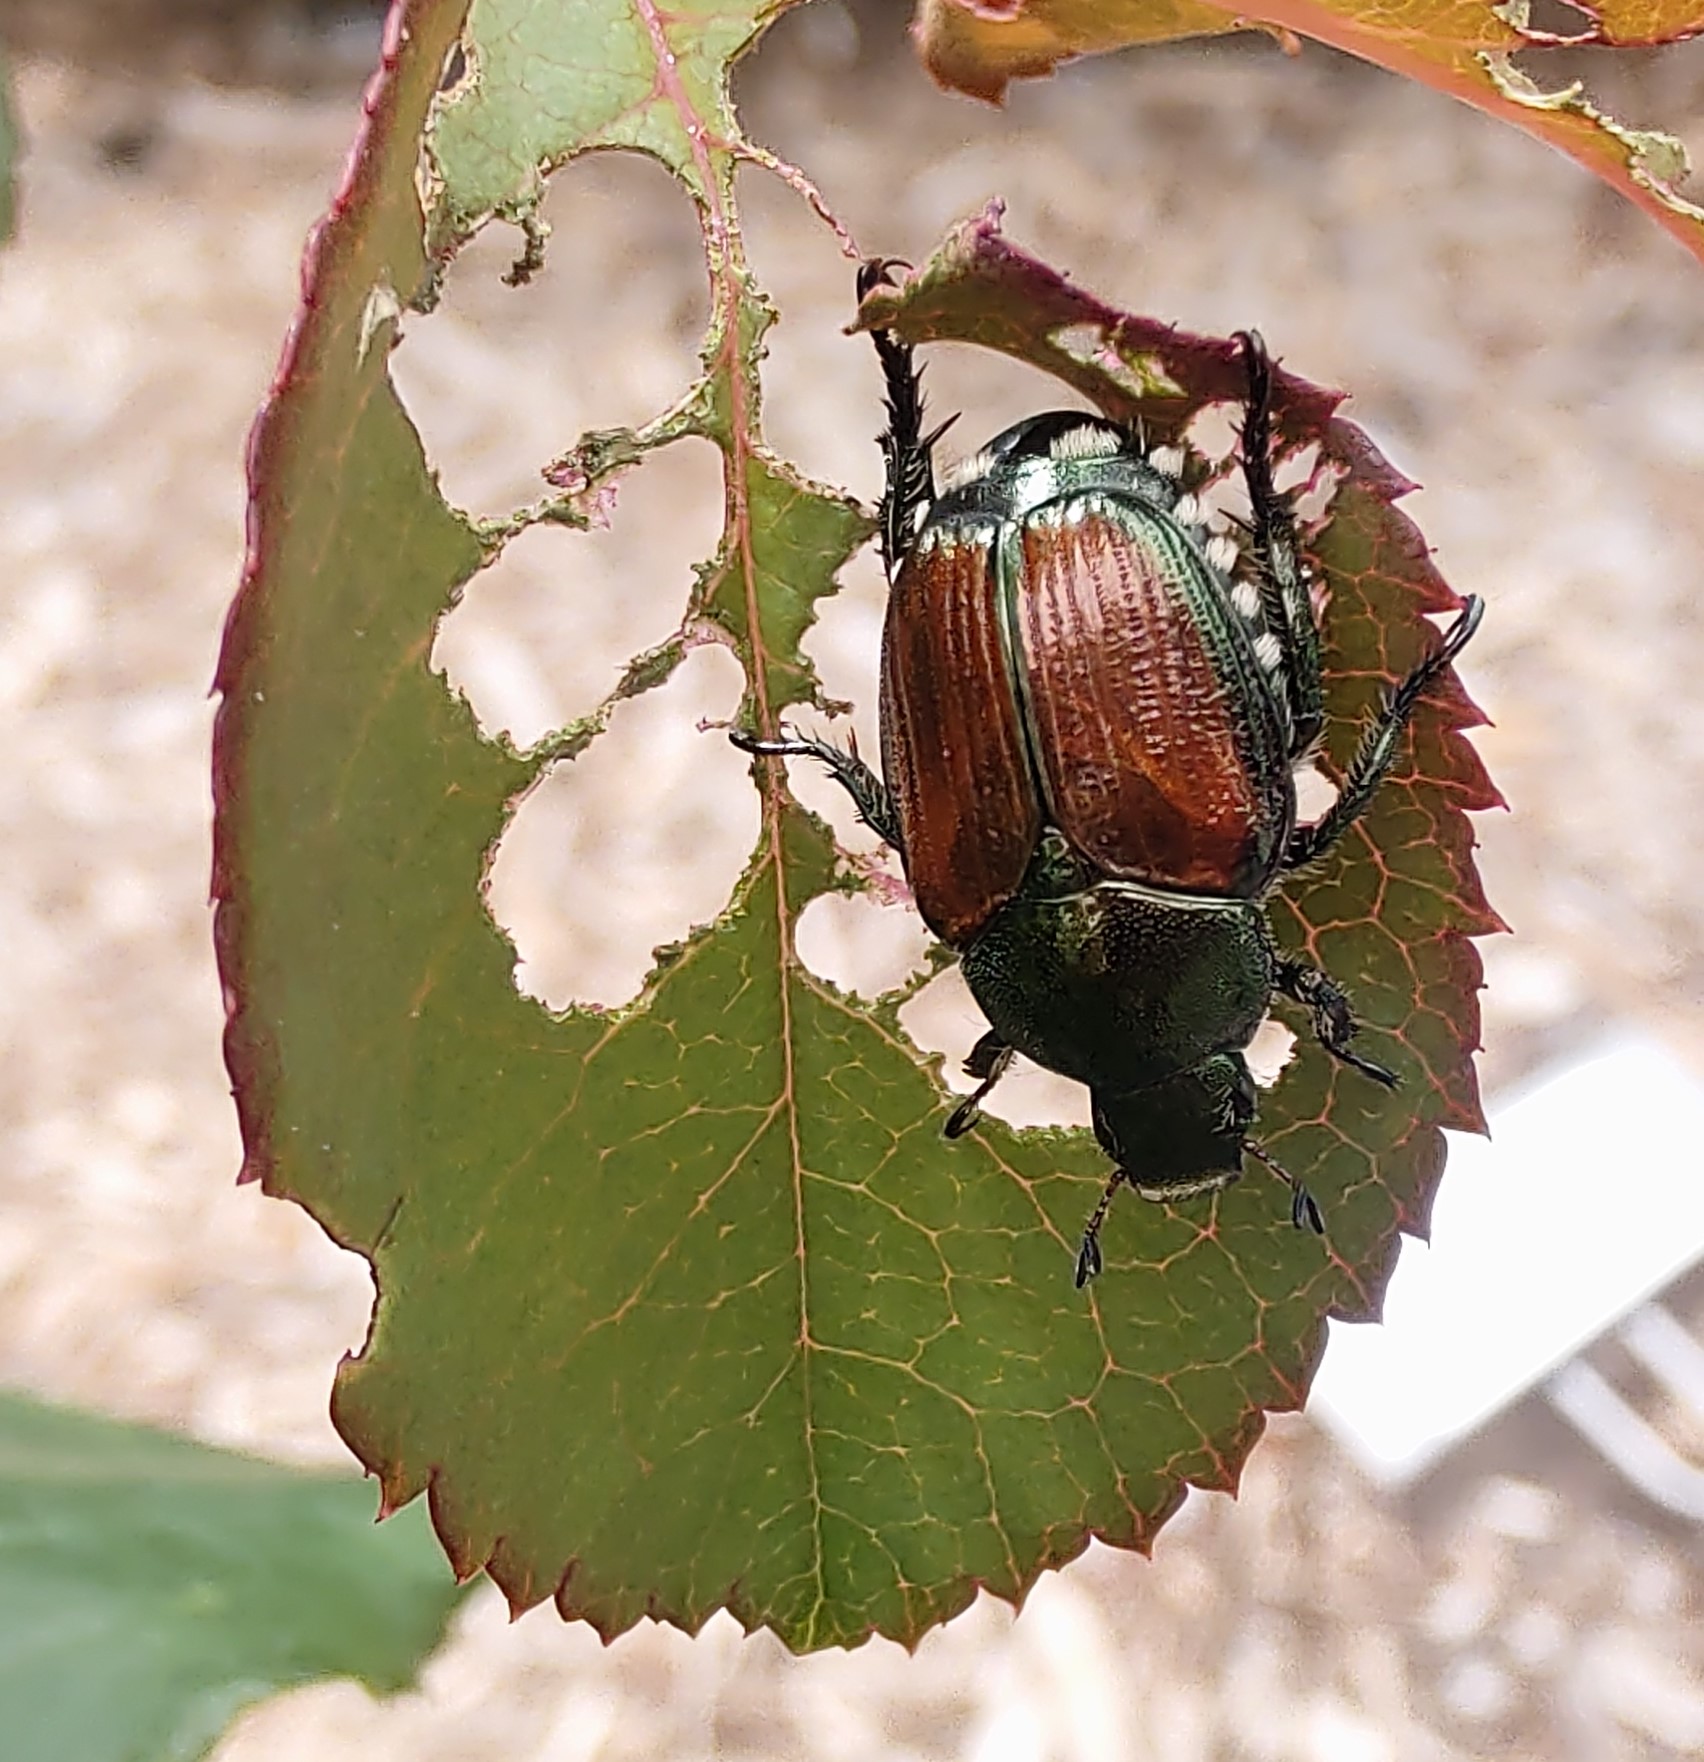 Japanese Beetle close up 